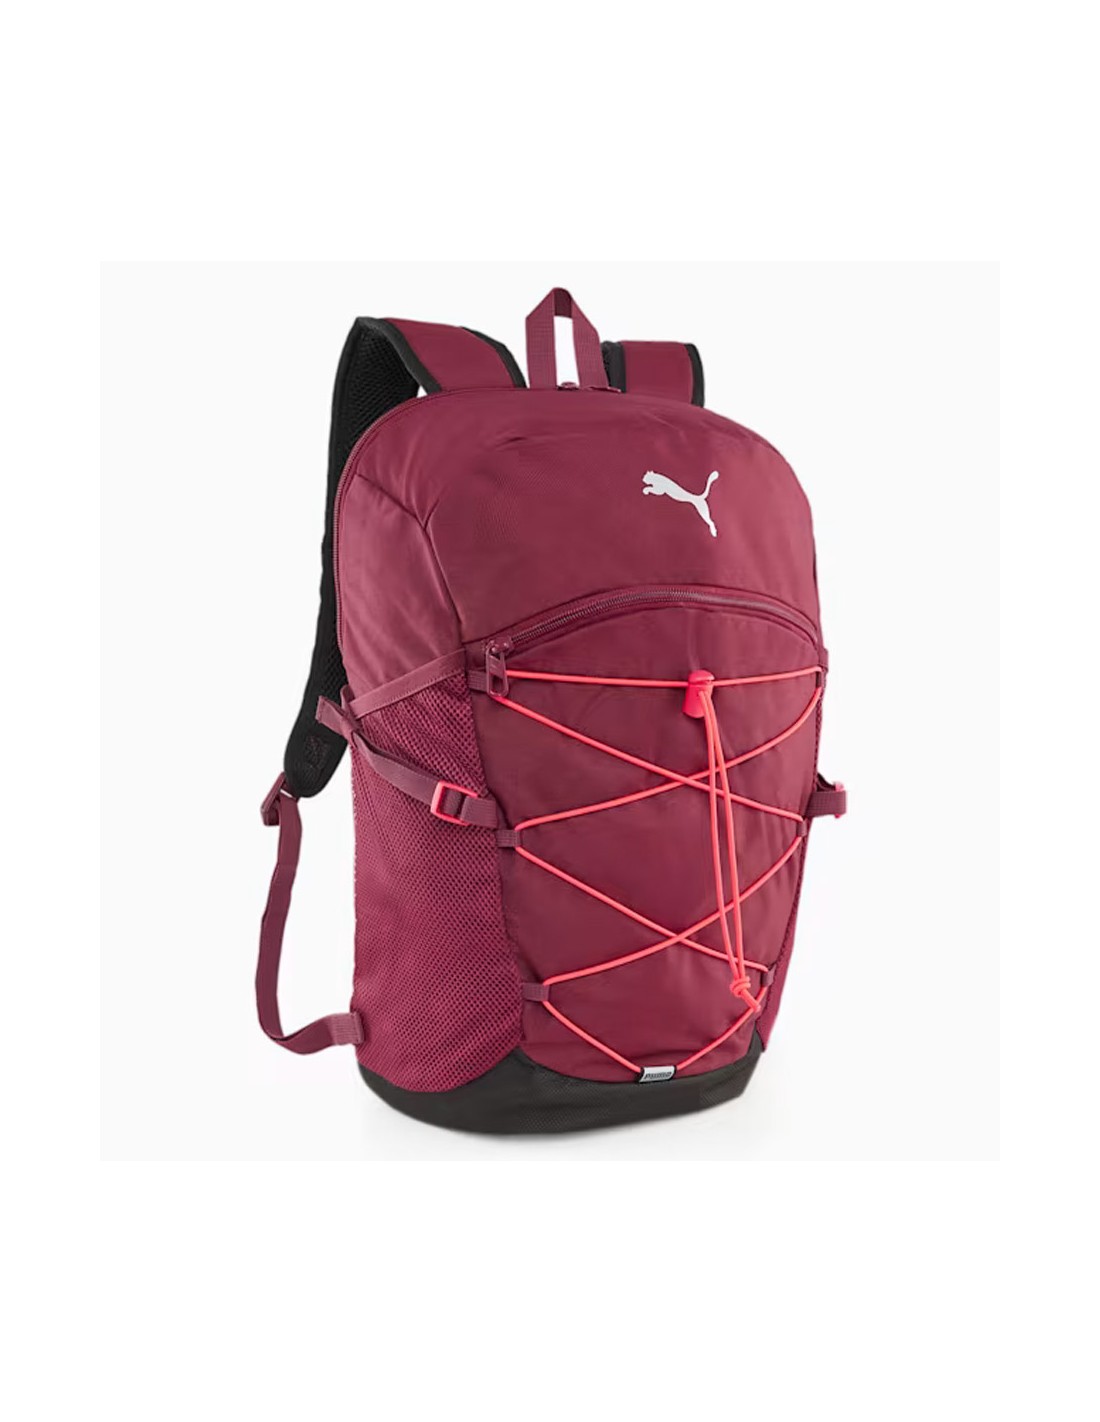 Backpack Plus Puma Pro 07952107